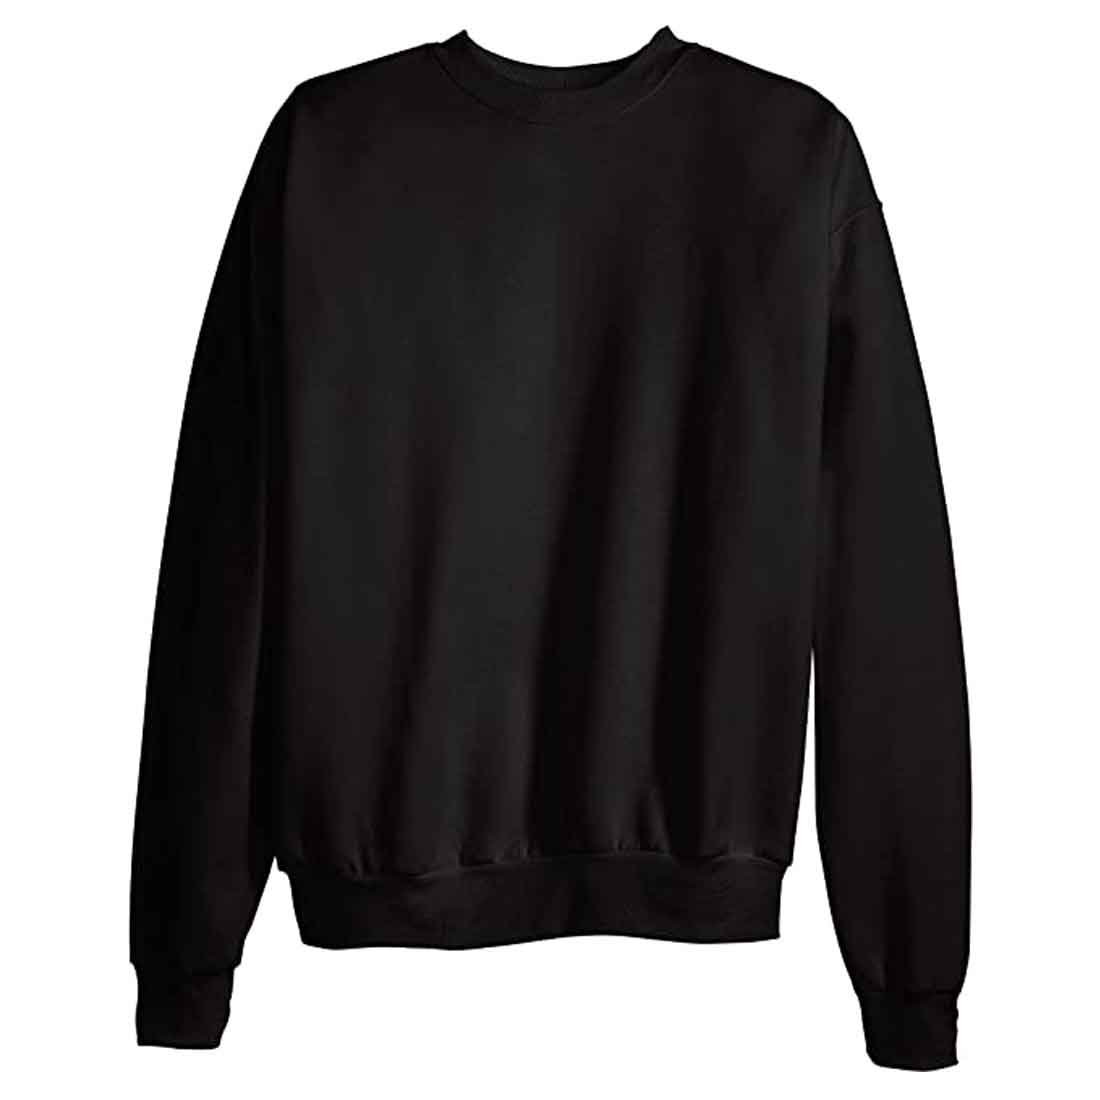 Black Crewneck Sweatshirt for Men Regular Use - Banglore Boy